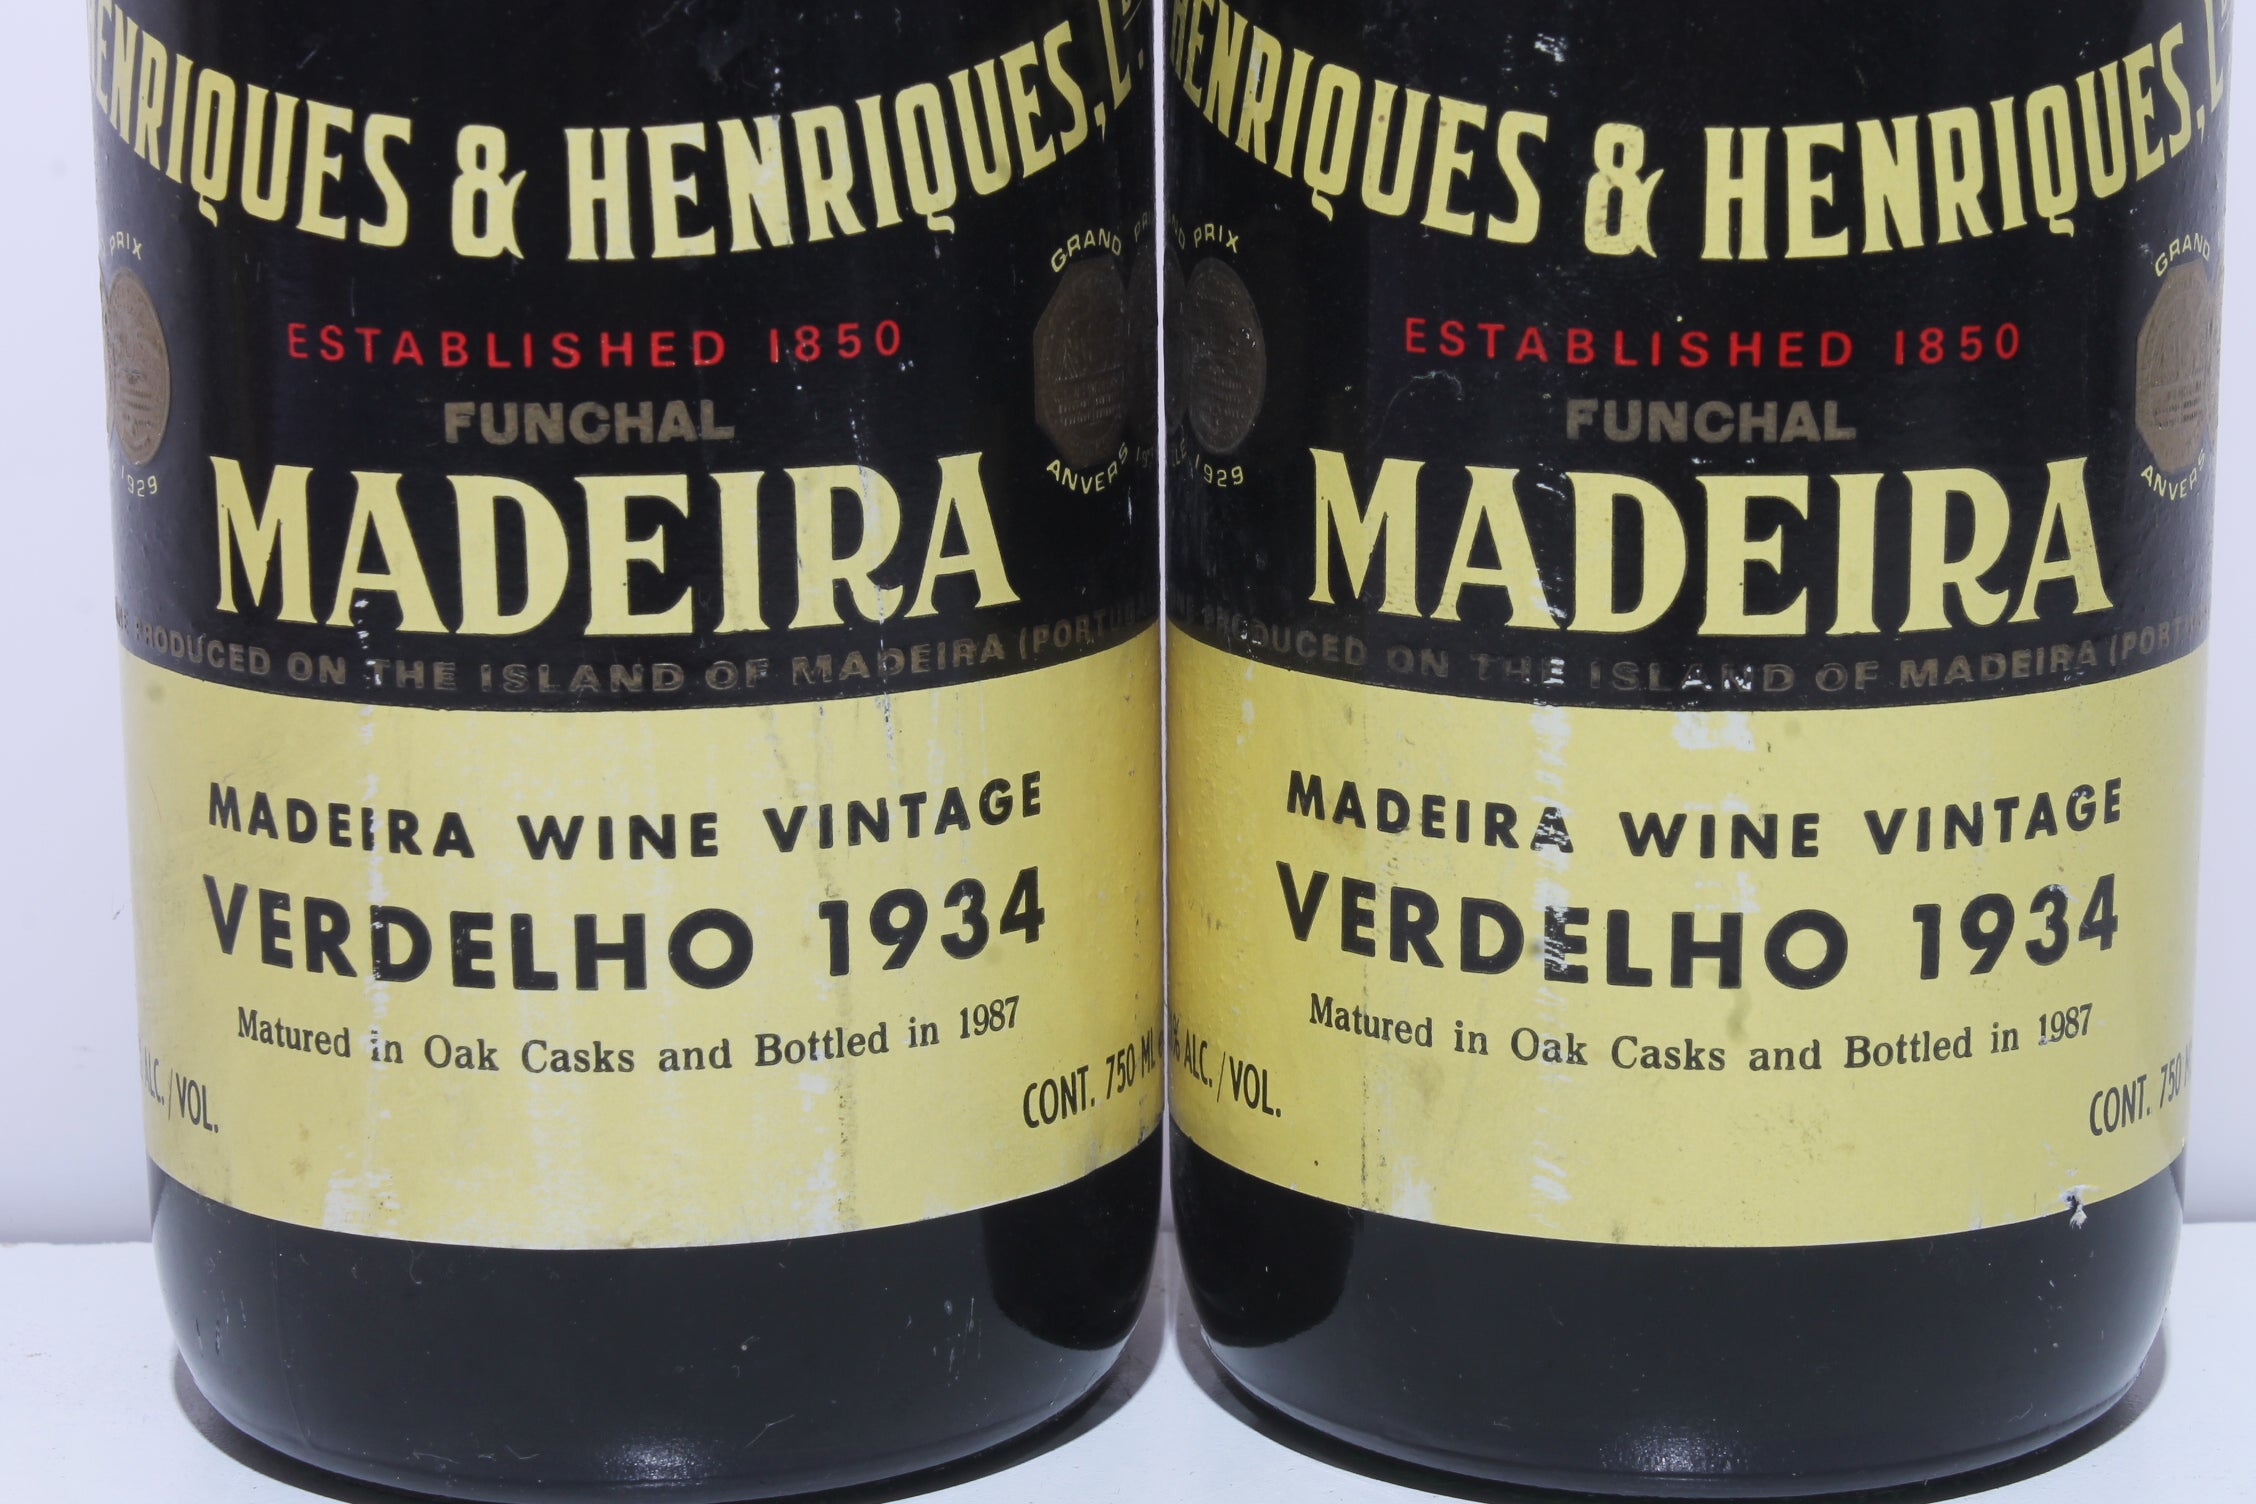 Henriques & Henriques, Verdelho Vintage, Madeira 1934 - 75cl